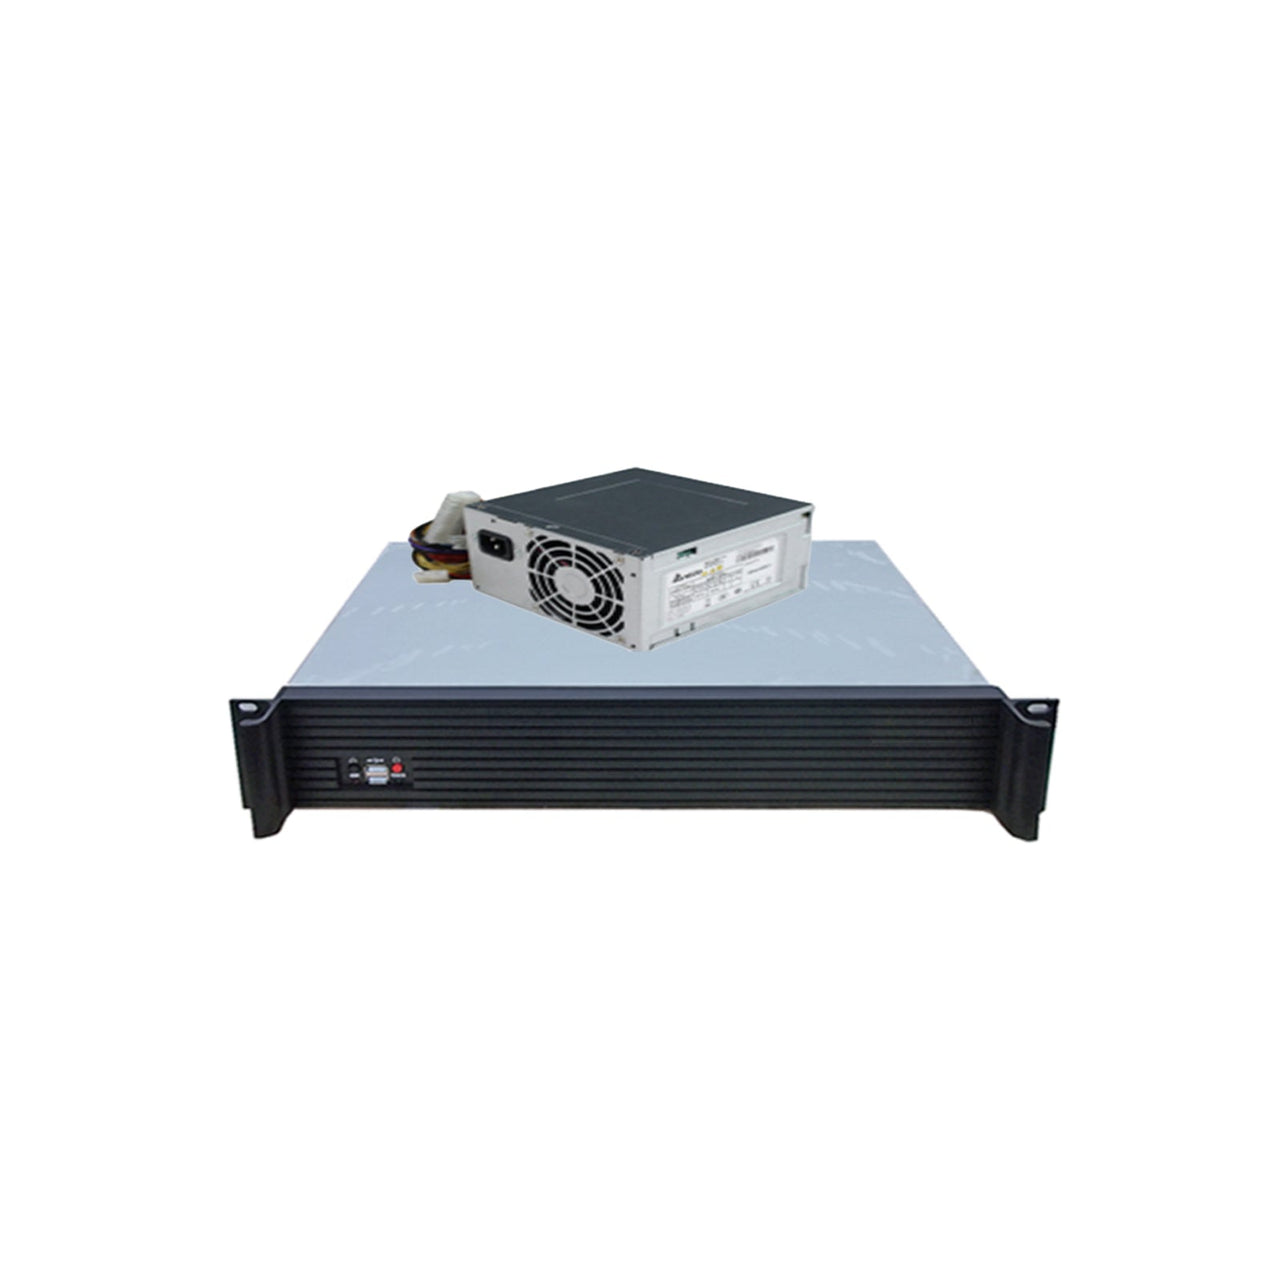 JideTech X86 Super NVR, Centralized Storage Management Device Support 64pcs Cameras Input (NVSS8304-64)